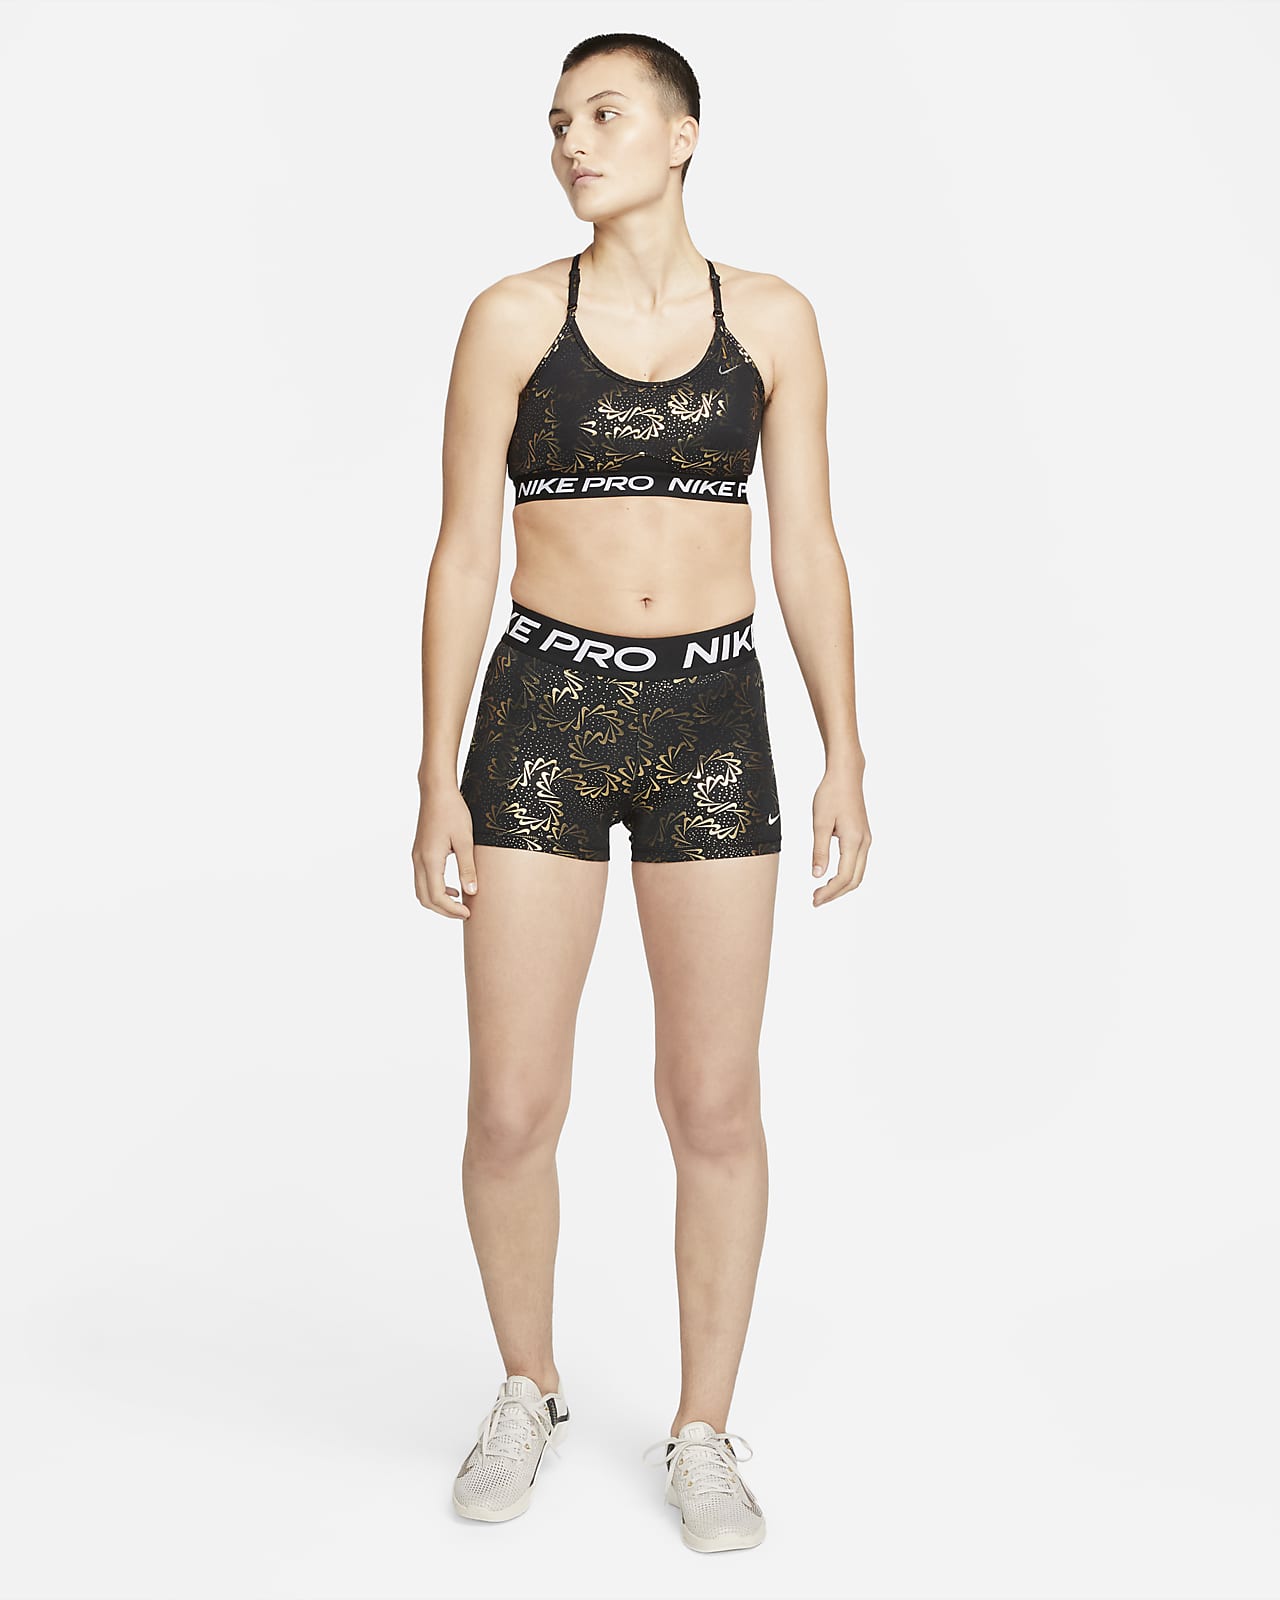 Women’s Nike Pro sports bra and athletic short set